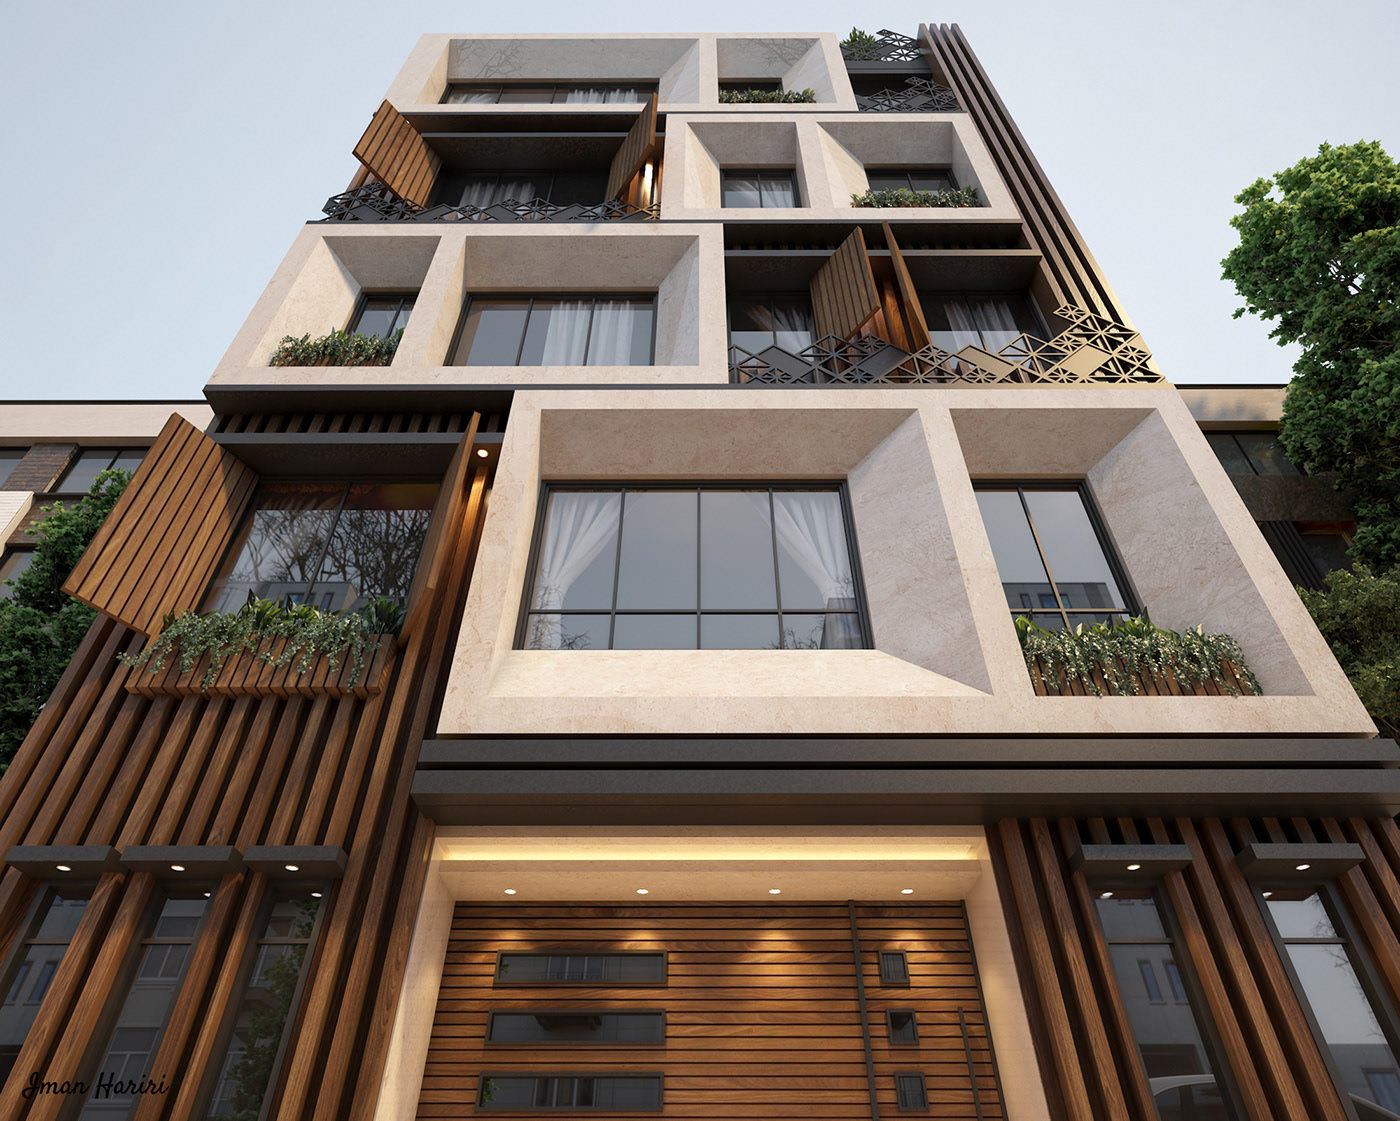 Residential modern facade deign on Behance